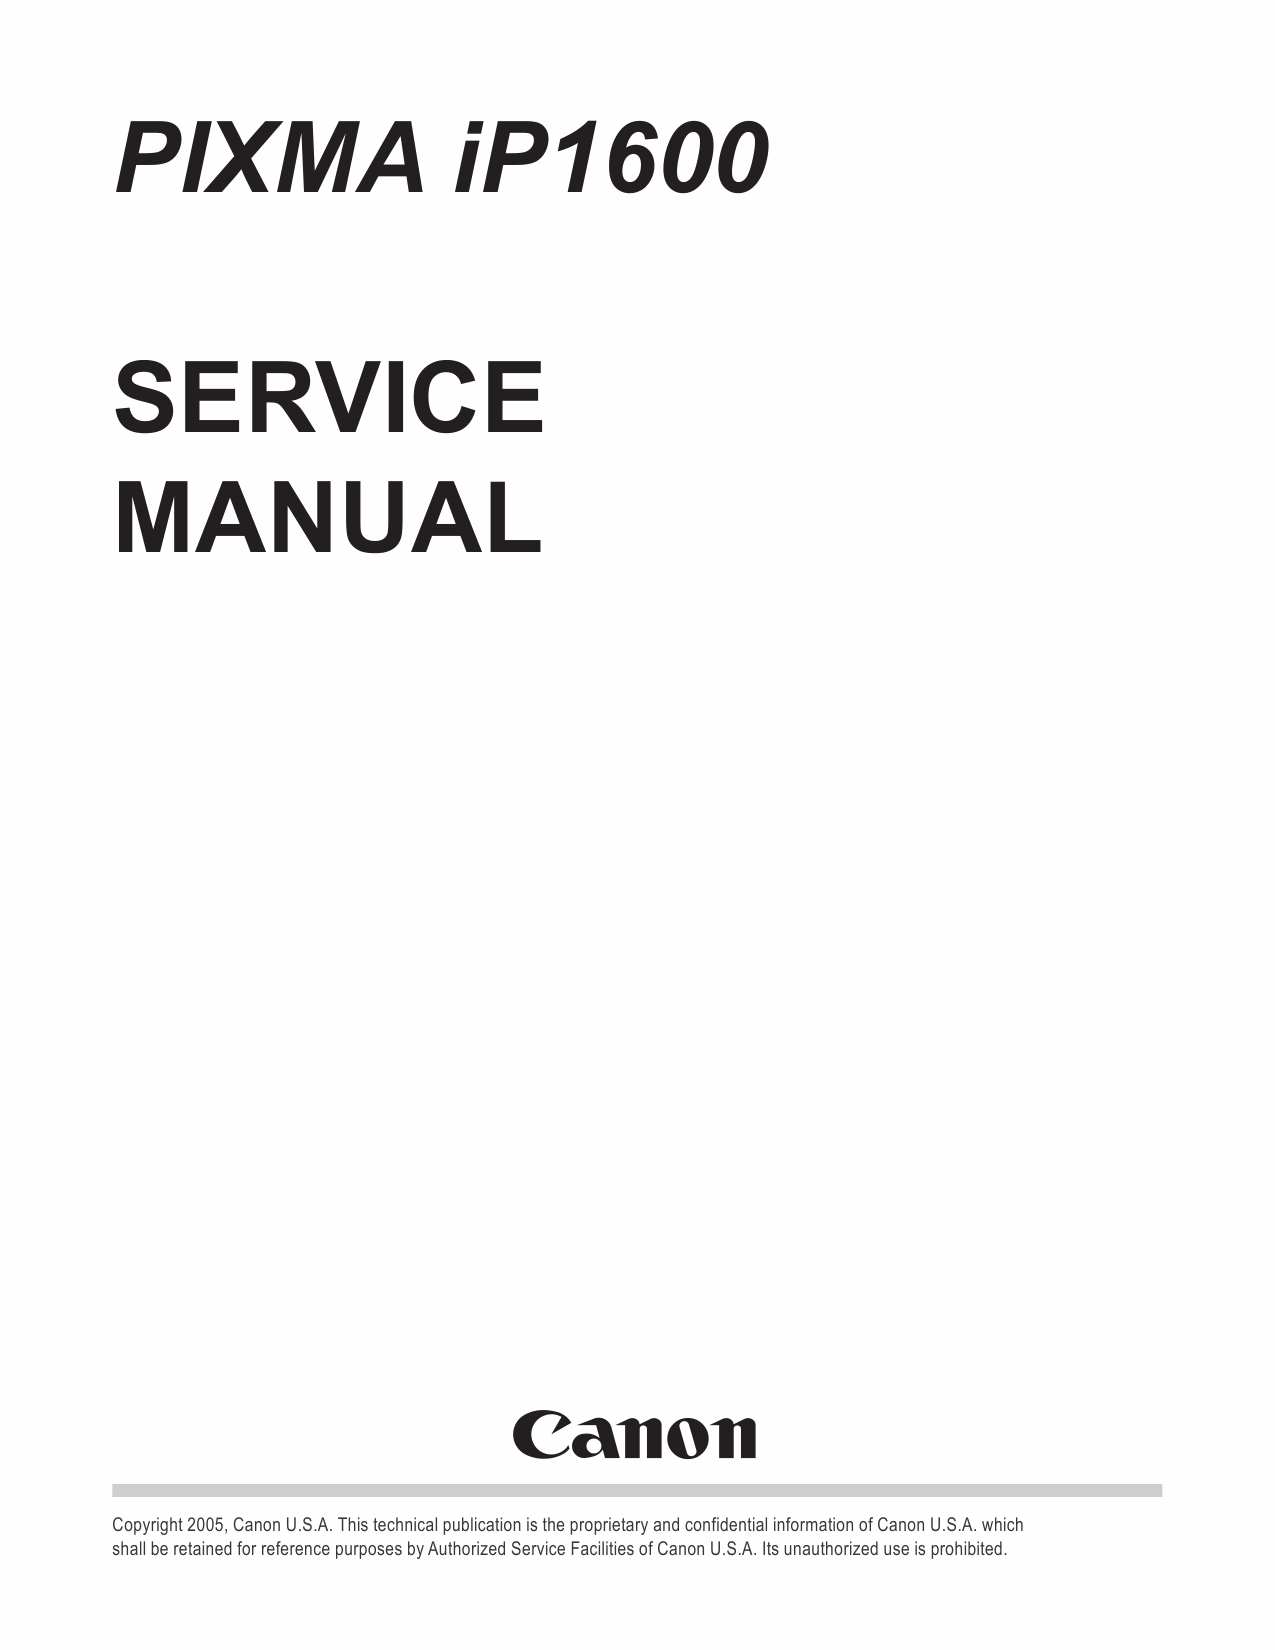 Canon PIXMA iP1600 Service Manual-1